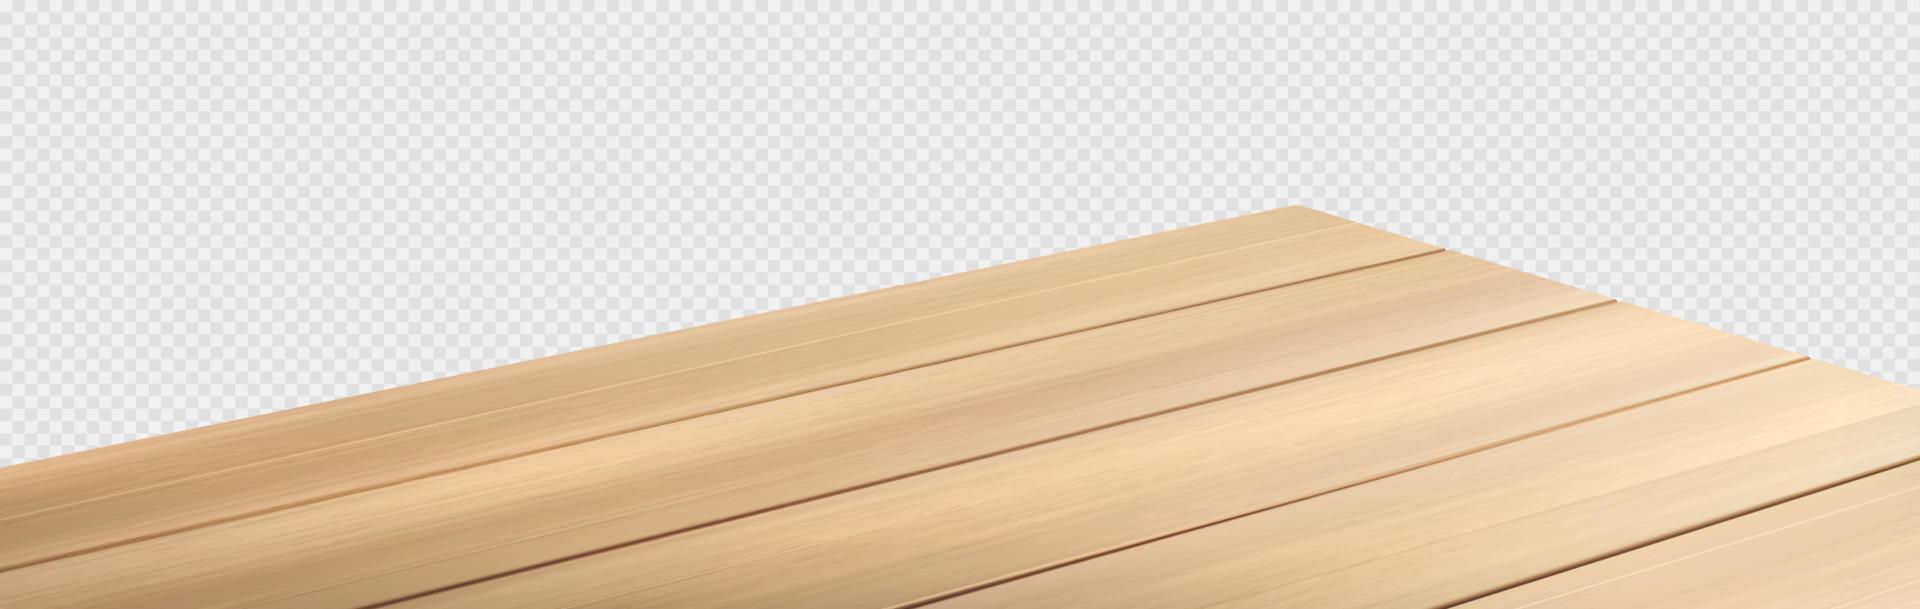 Dining wooden table top, corner perspective vector